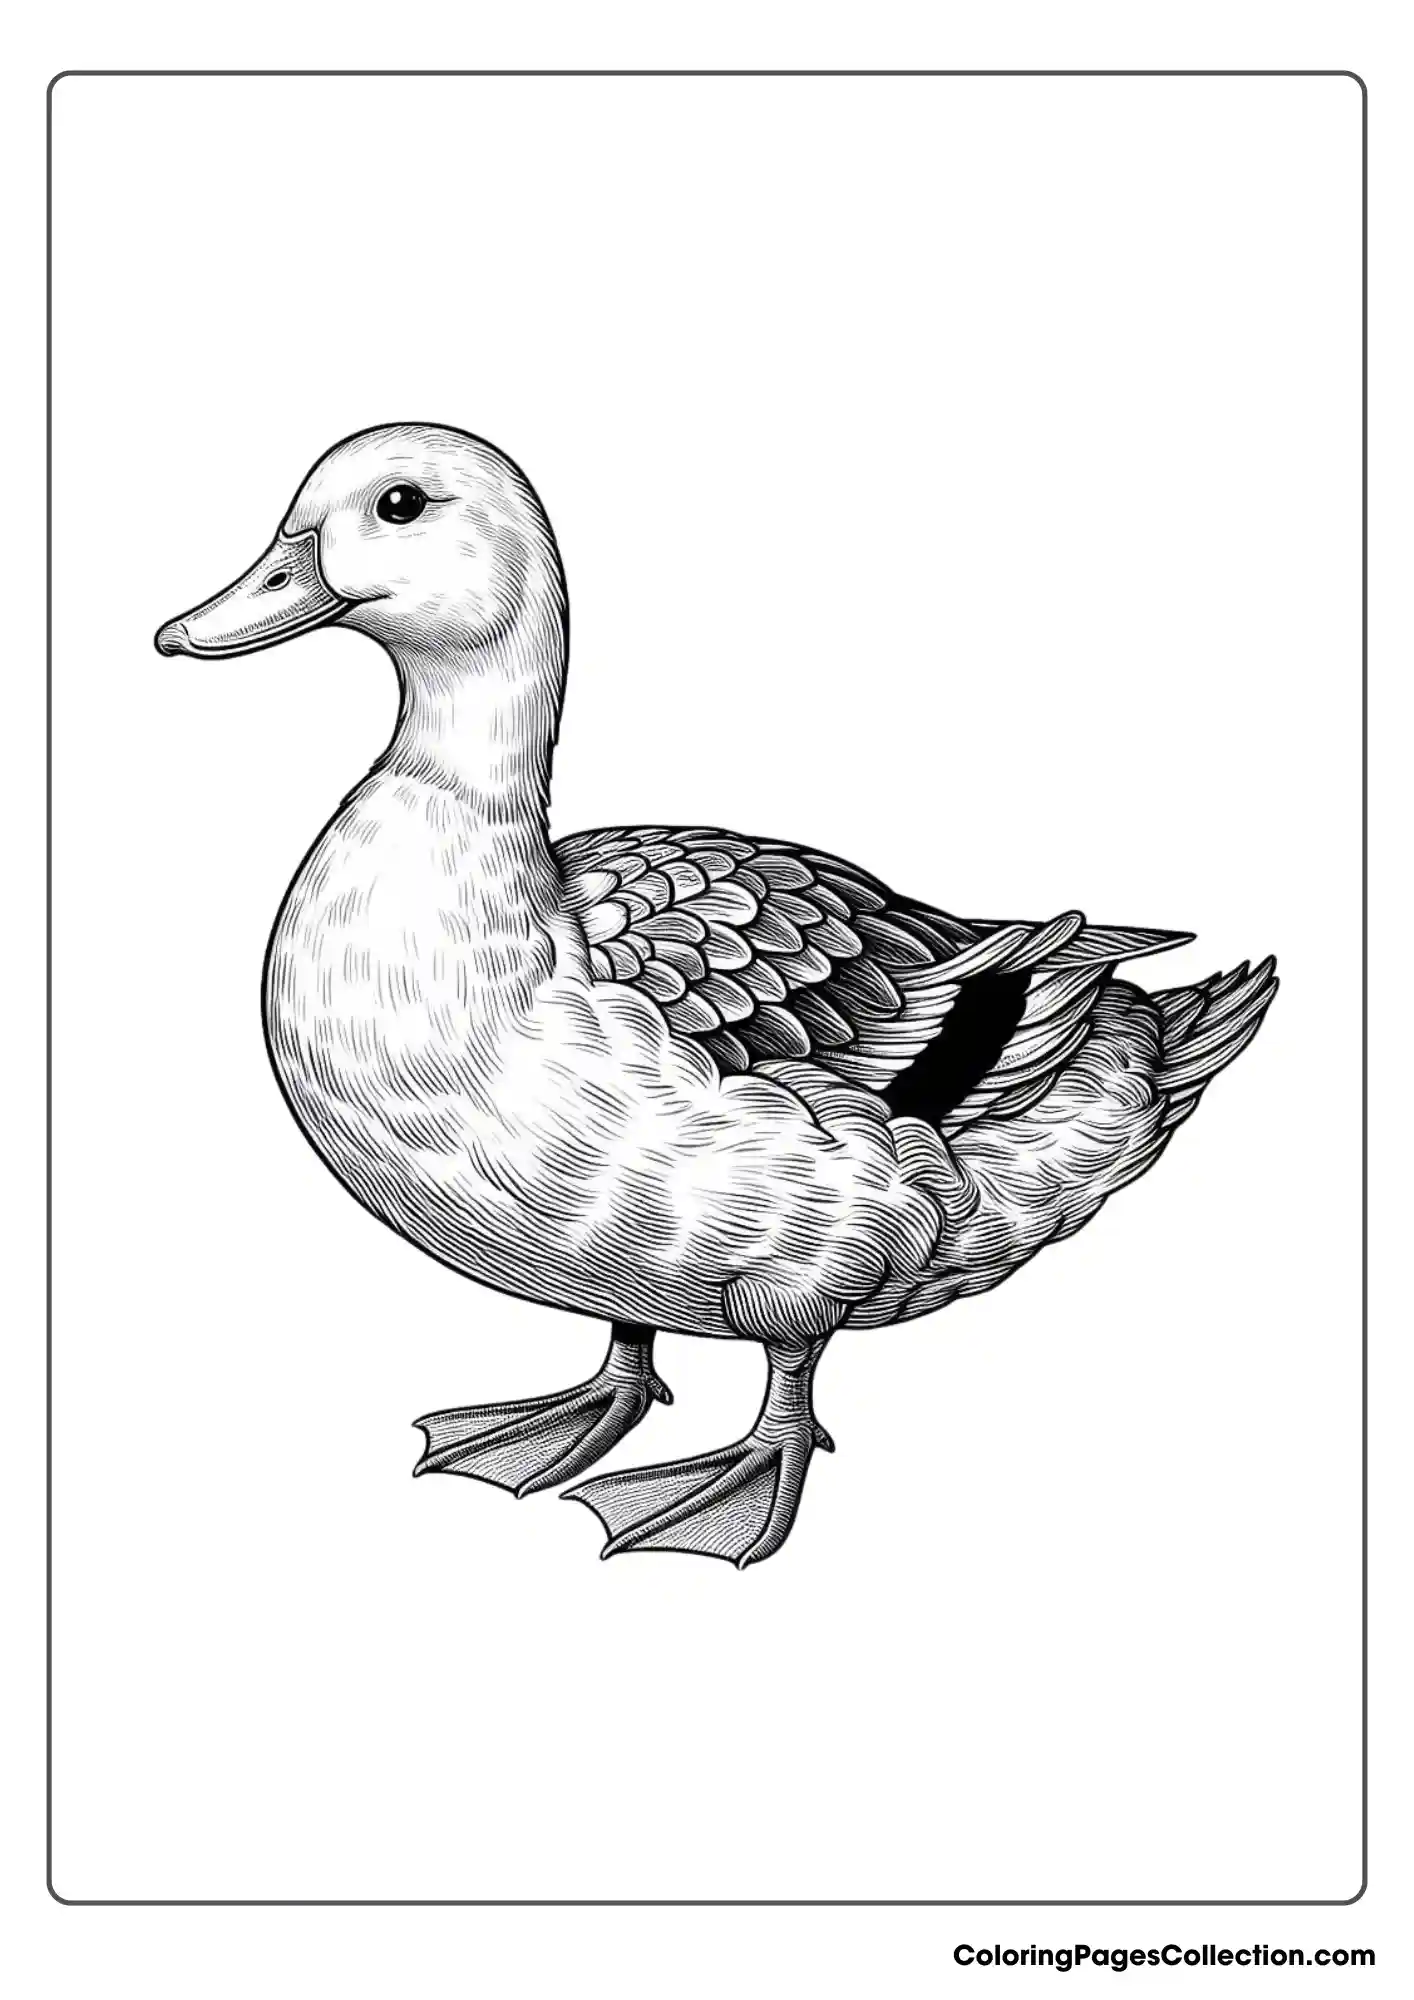 Realistic Duck.